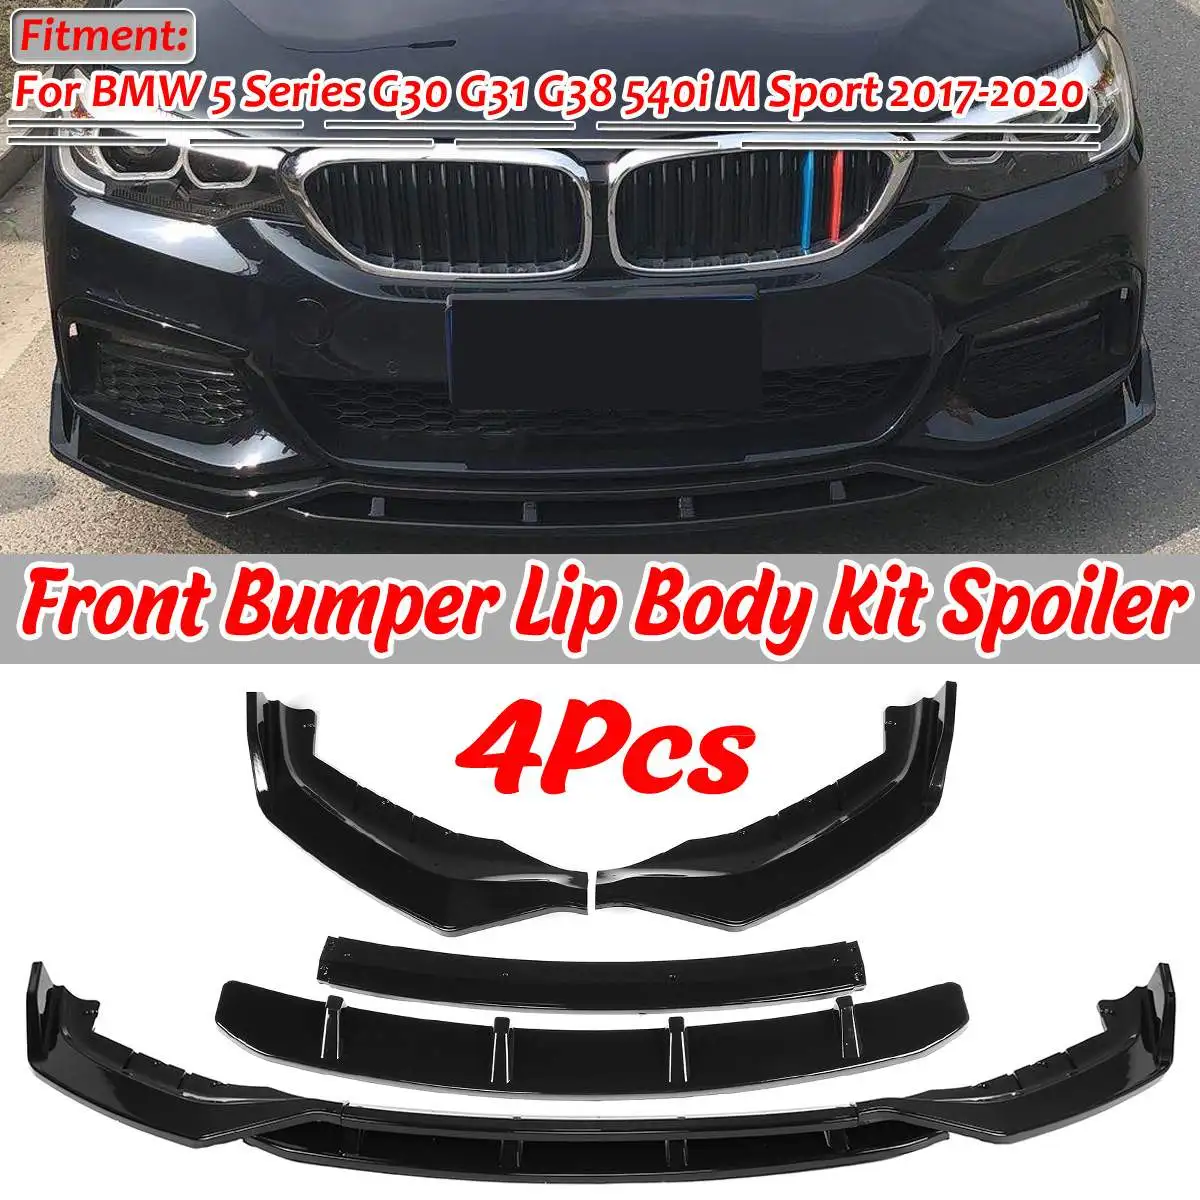 Bumper Spoiler G30 G31 G38 Car Front Lip Deflector Lips Body Kit for BMW 5 Series G30 G31 G38 540I M Sport 2017 2018 2019 2020,Matte Black 